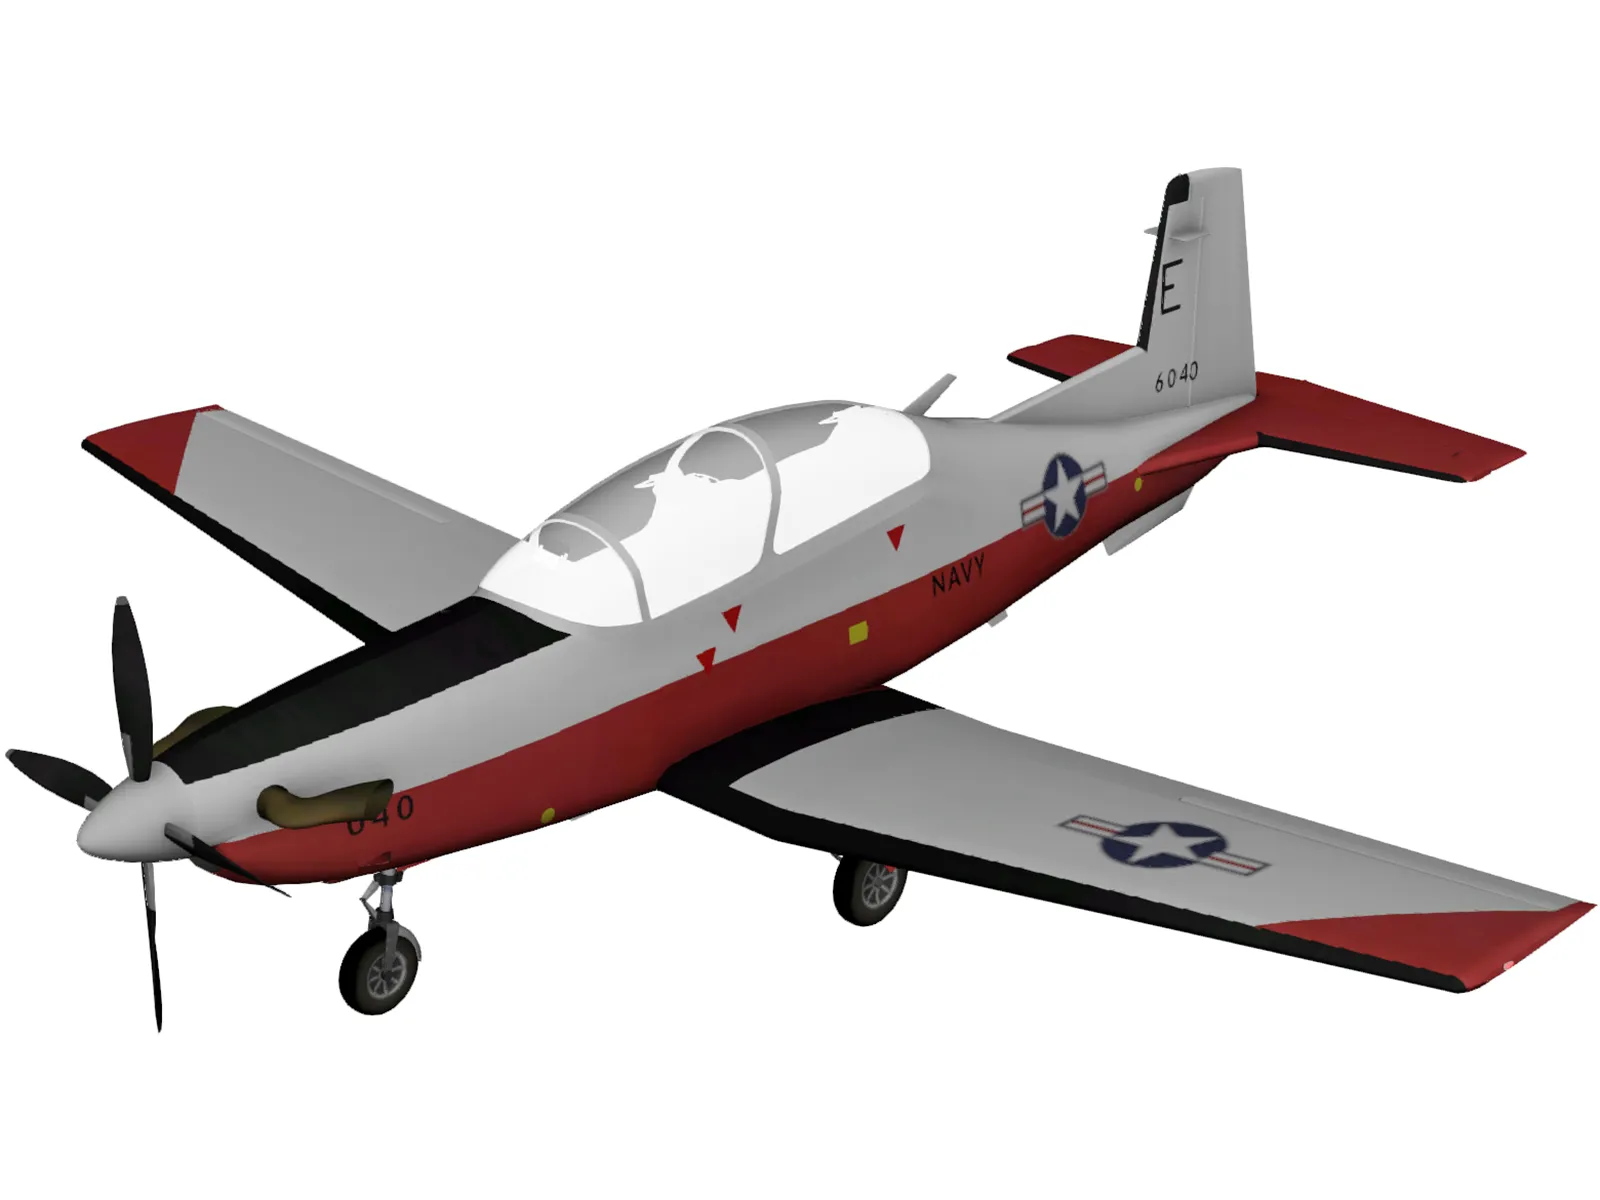 Beechcraft T-6 Texan II 3D Model